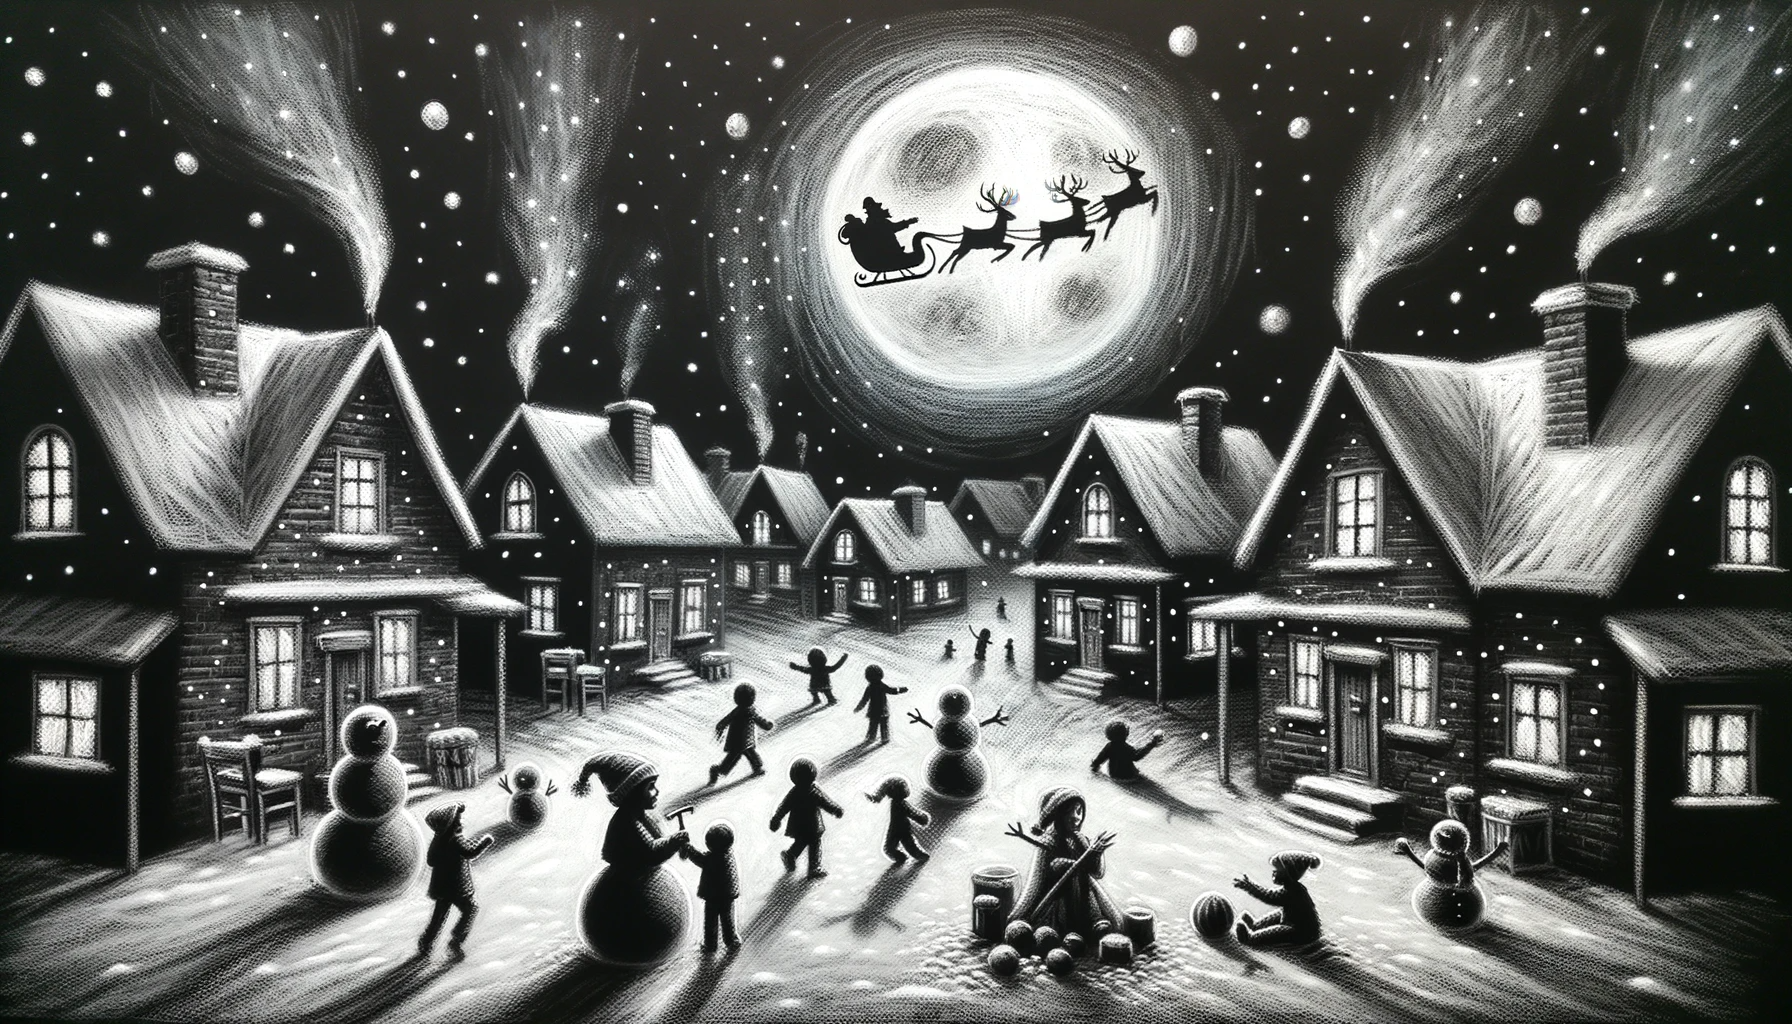 Moonlit Christmas Village